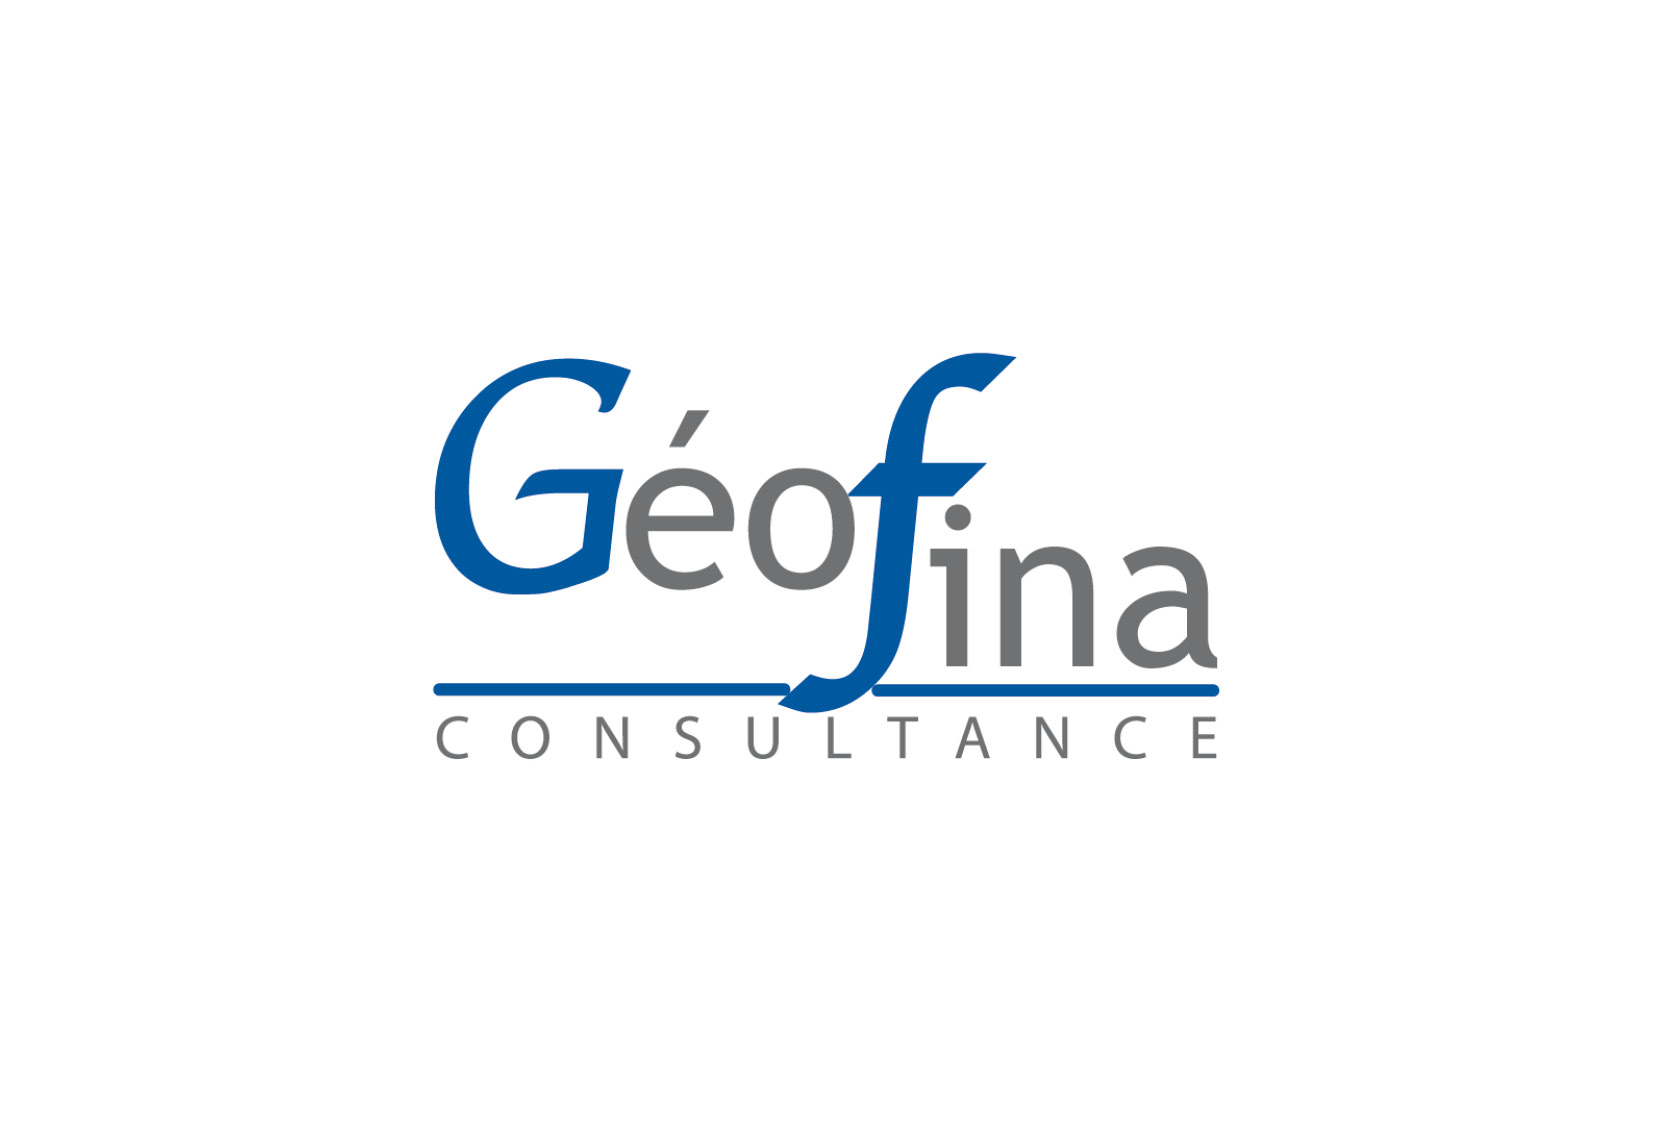 Géofina - logo 